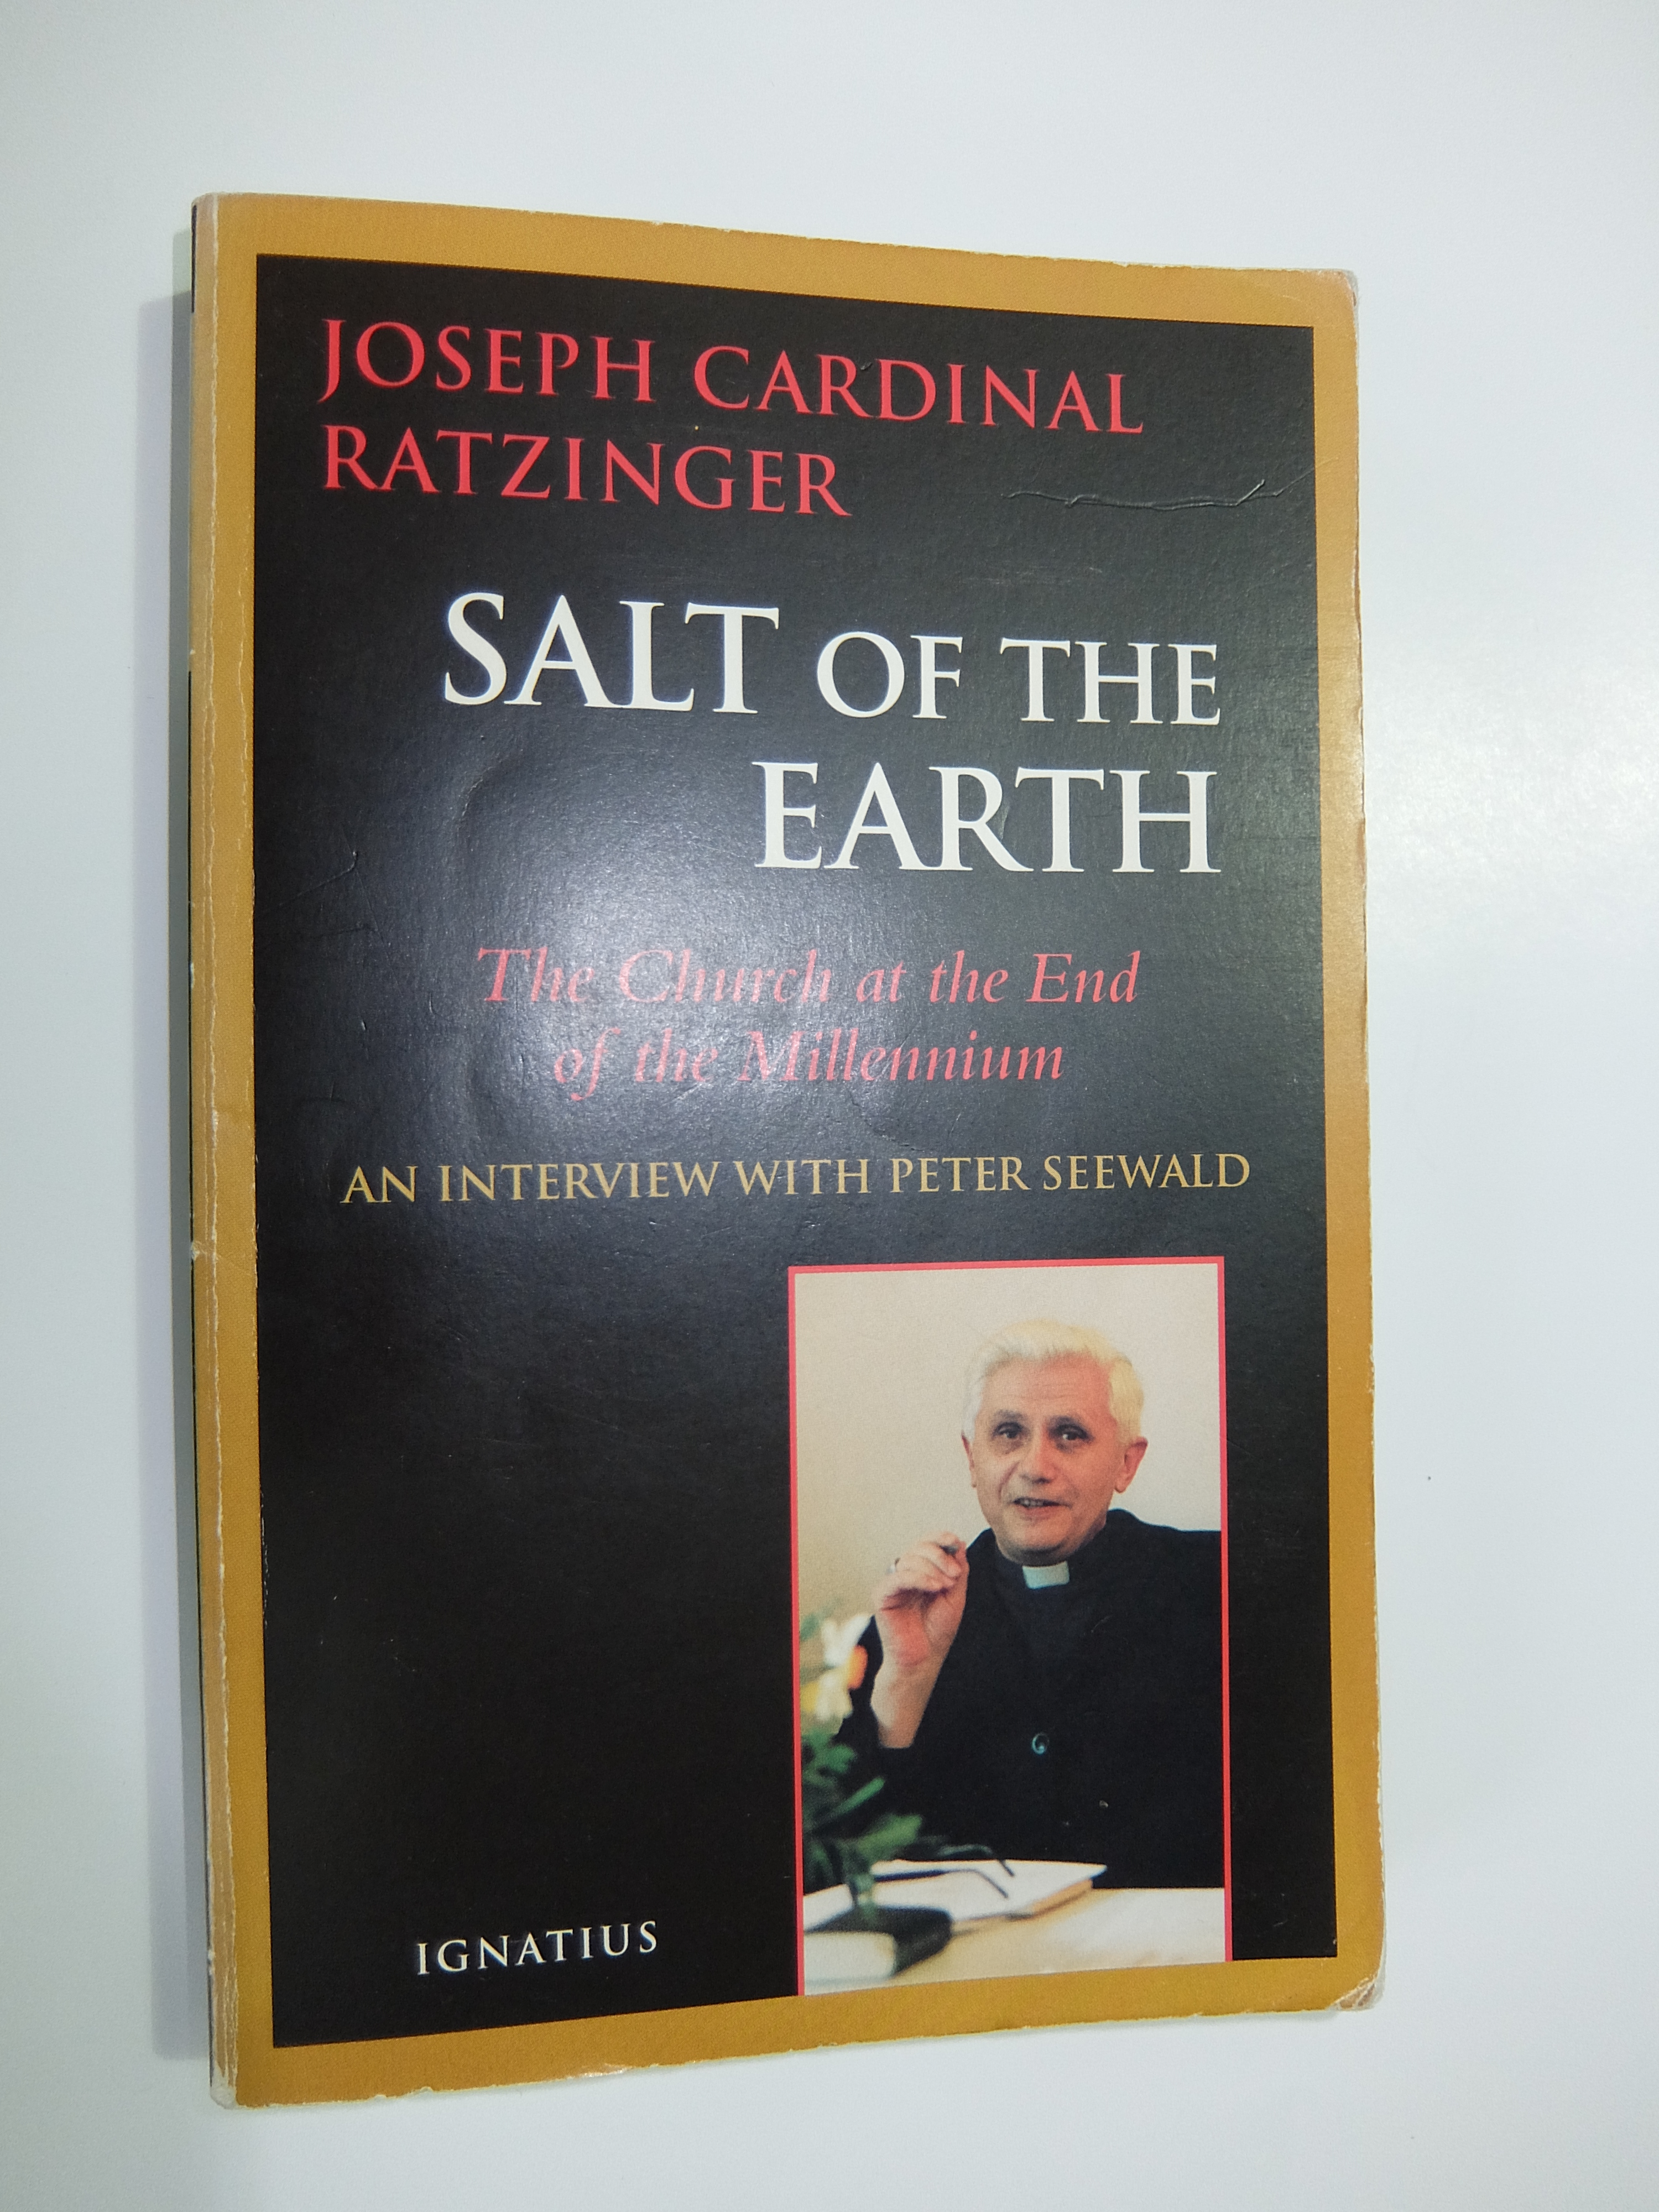 Salt of the Earth - Joseph Cardinal Ratzinger Image